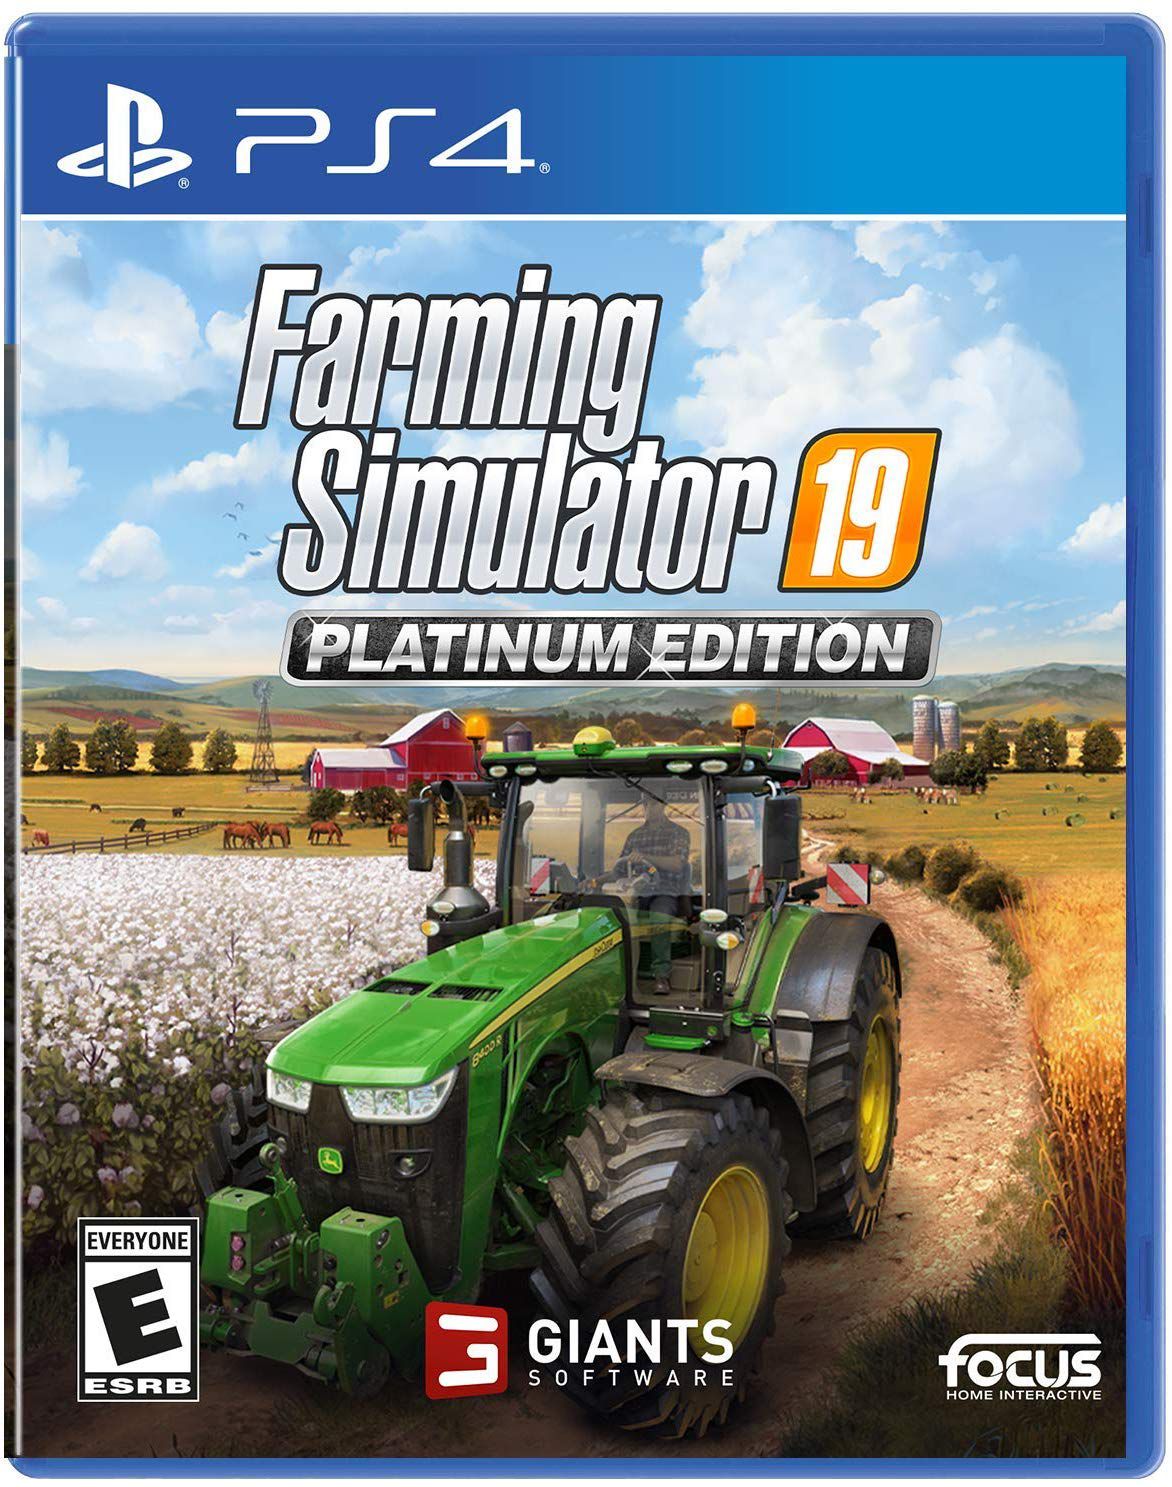 Análise) Farming Simulator 19: Bem vindo à agricultura! (PS4) - Leak